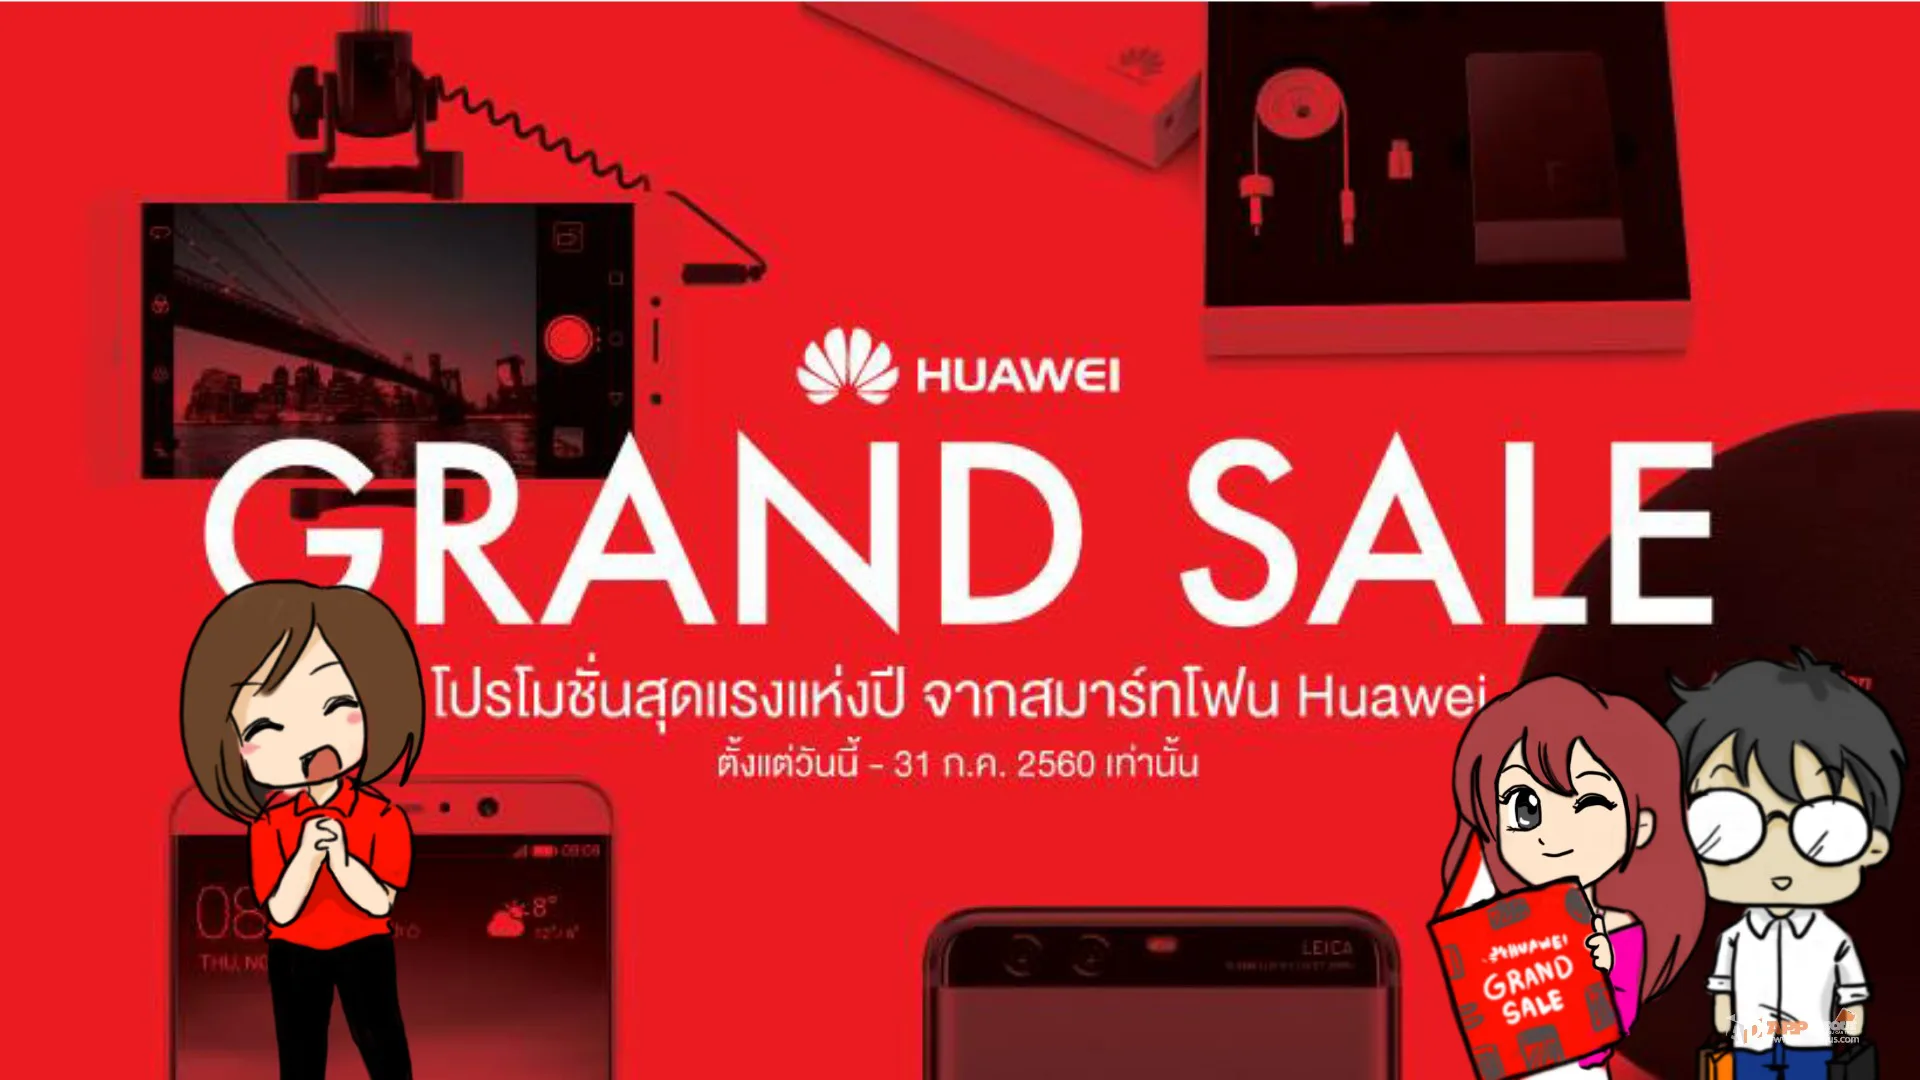 Hauwei | Huawei | Huawei Grand Sale ห้ามพลาดกับช่วงสุดท้ายของโปรโมชั่นแถมหนักที่สุด จากสมาร์ทโฟนหัวเว่ย!!!